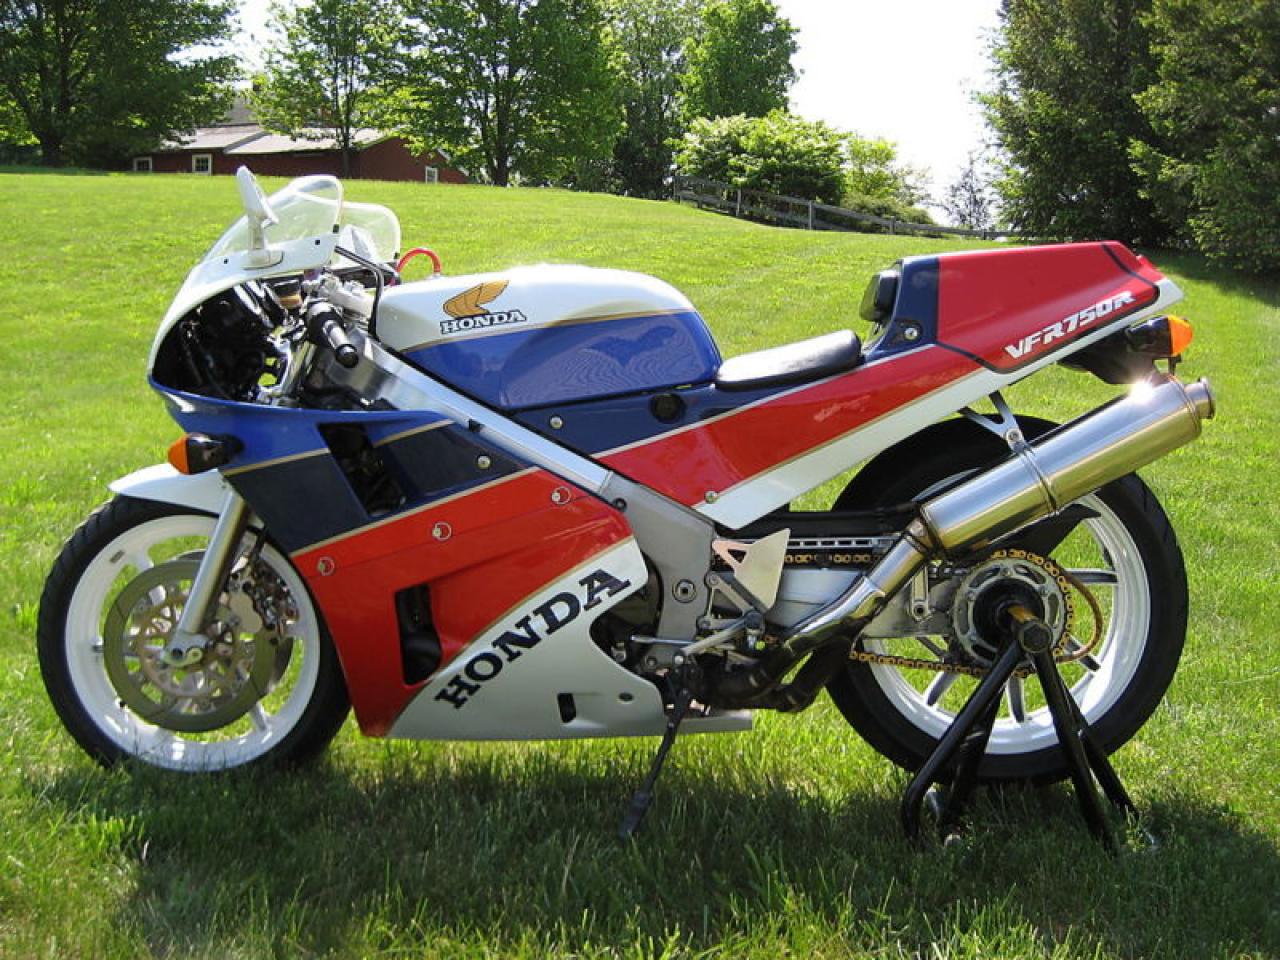 Honda vfr750f: review, history, specs - bikeswiki.com, japanese motorcycle encyclopedia